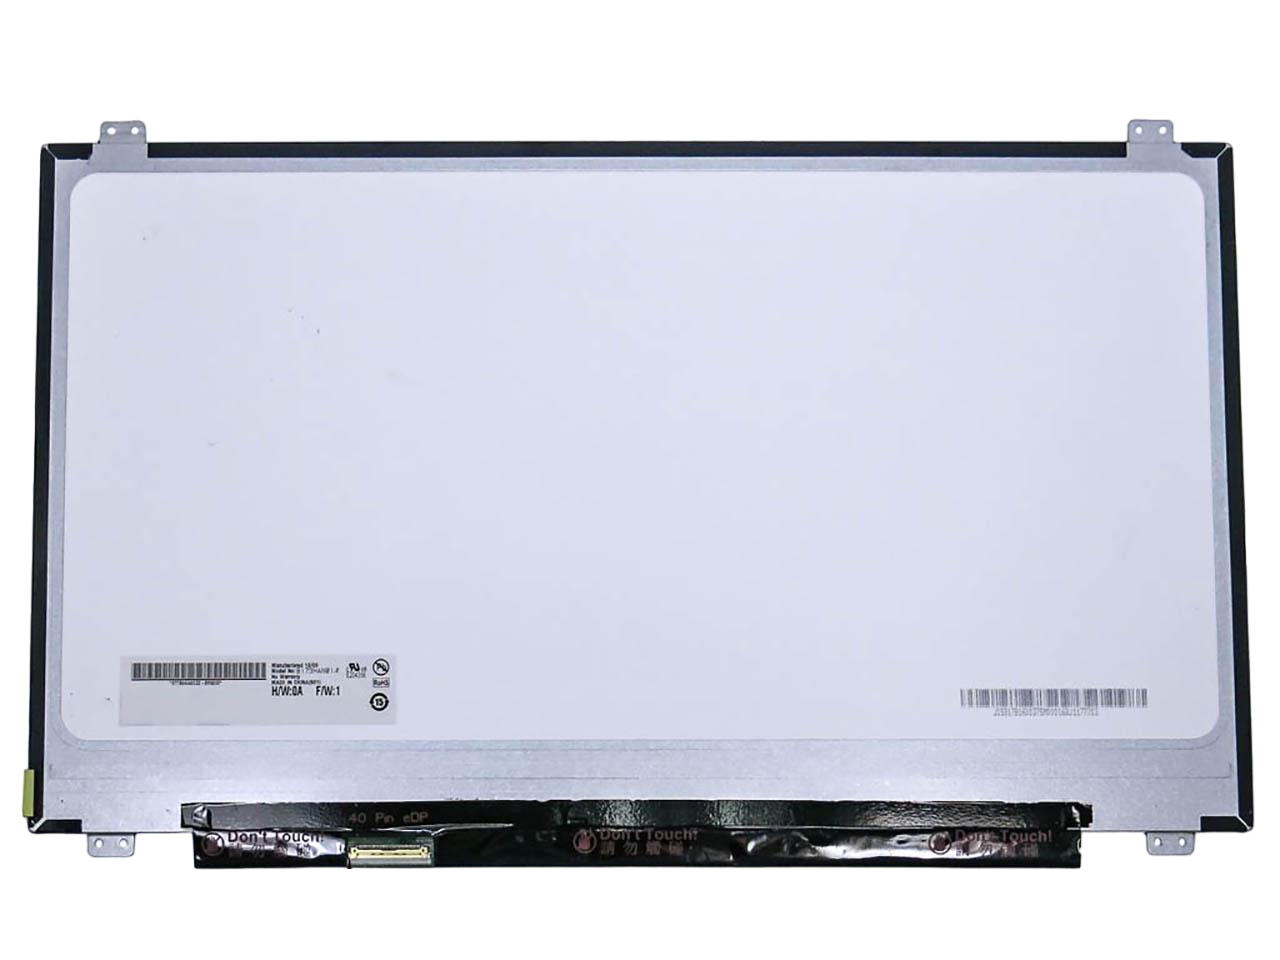 Матриця для ноутбука LP173WFG-SPD2 17,3" 1920х1080 144Hz Full HD 1080p/HDTV 16:9 роз'єм eDP 40 pin зліва внизу (48586)